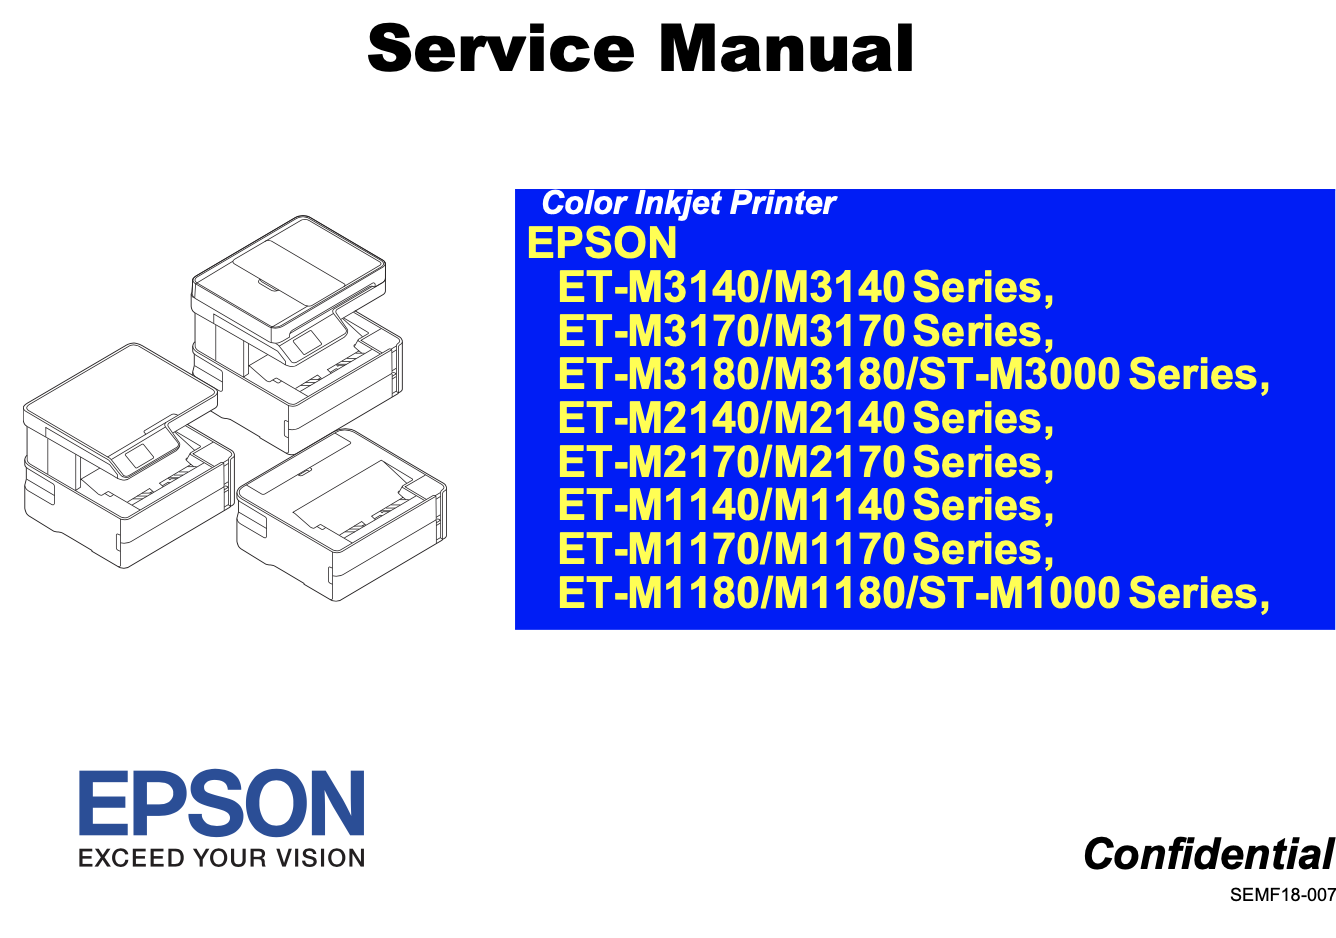 EPSON XP-610/XP-615 Parts Manual